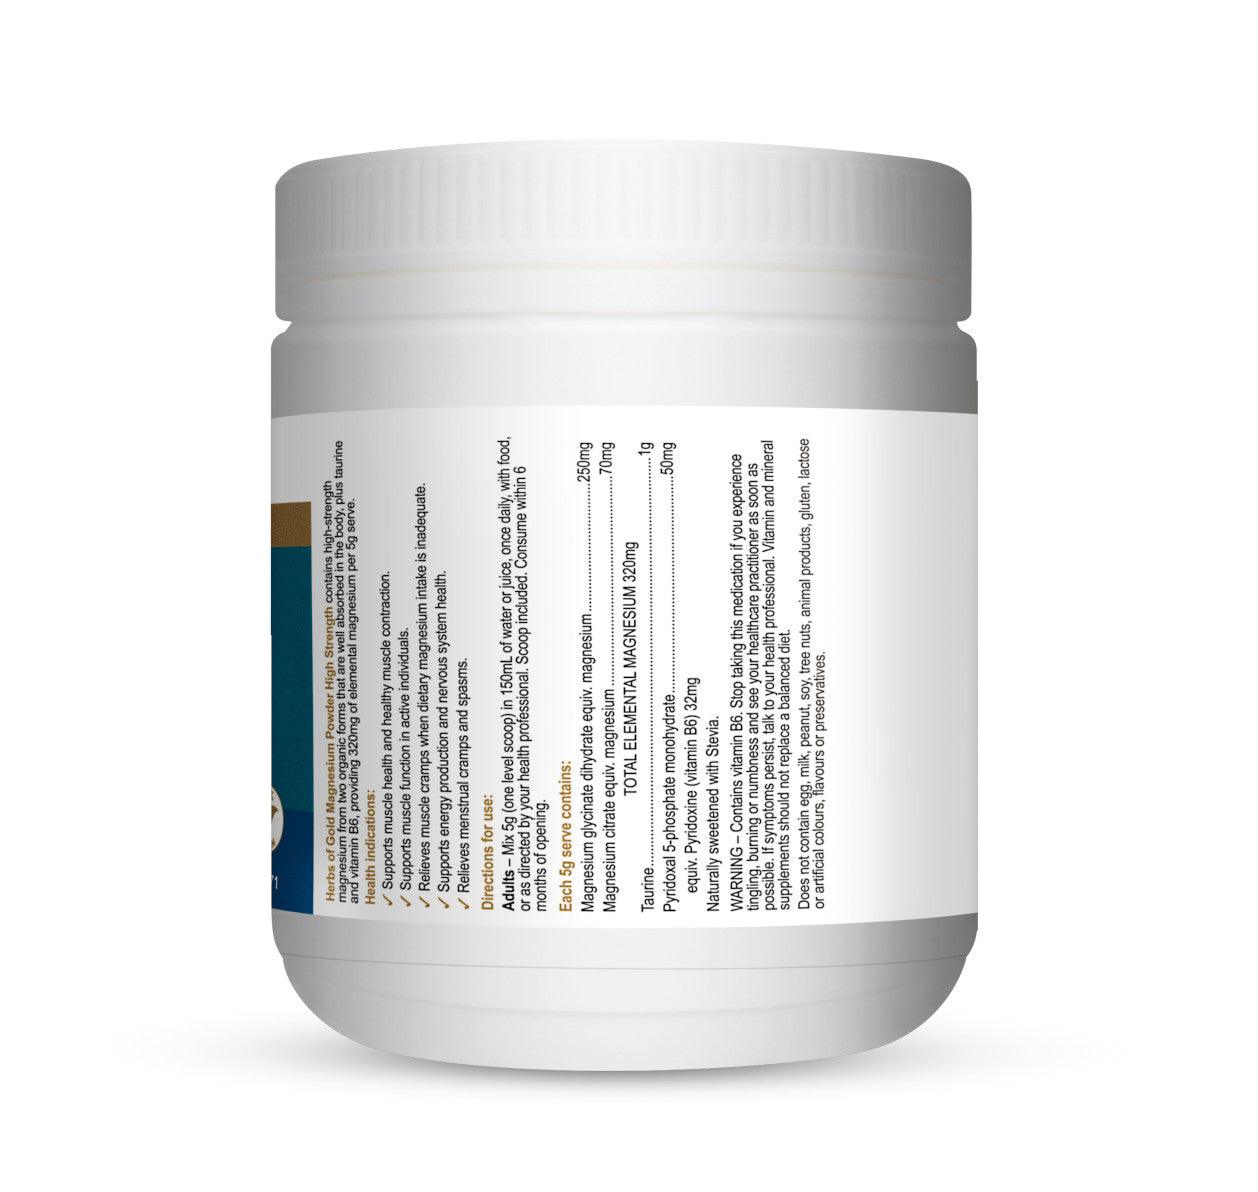 Herbs of Gold Magnesium Powder High Strength 150g - QVM Vitamins™